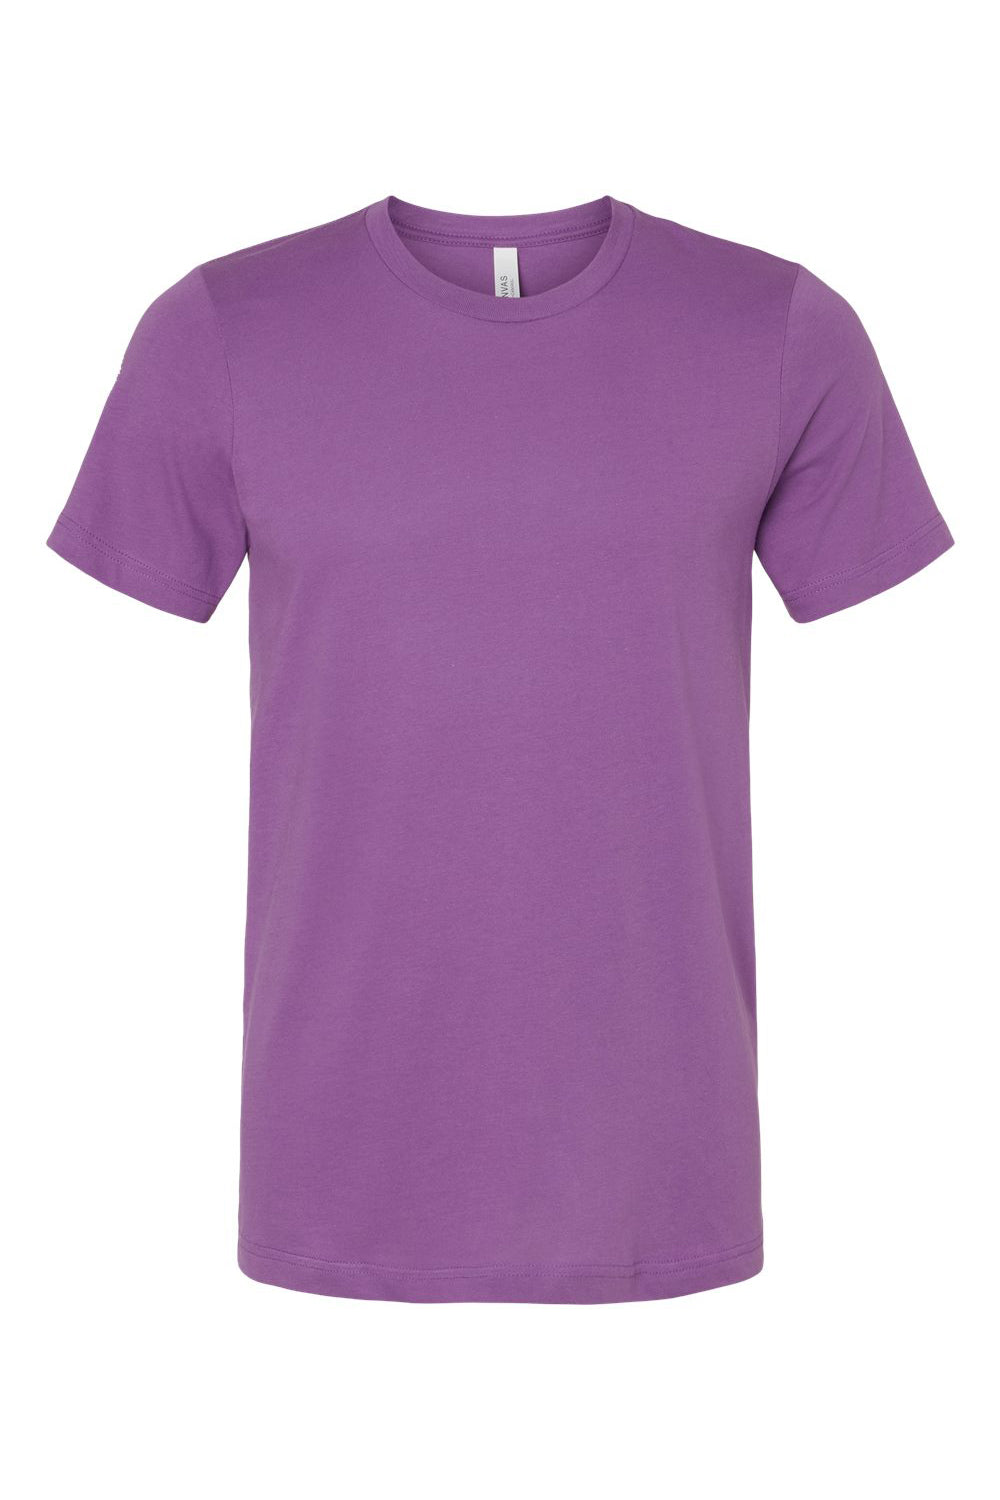 Bella + Canvas BC3001/3001C Mens Jersey Short Sleeve Crewneck T-Shirt Royal Purple Flat Front